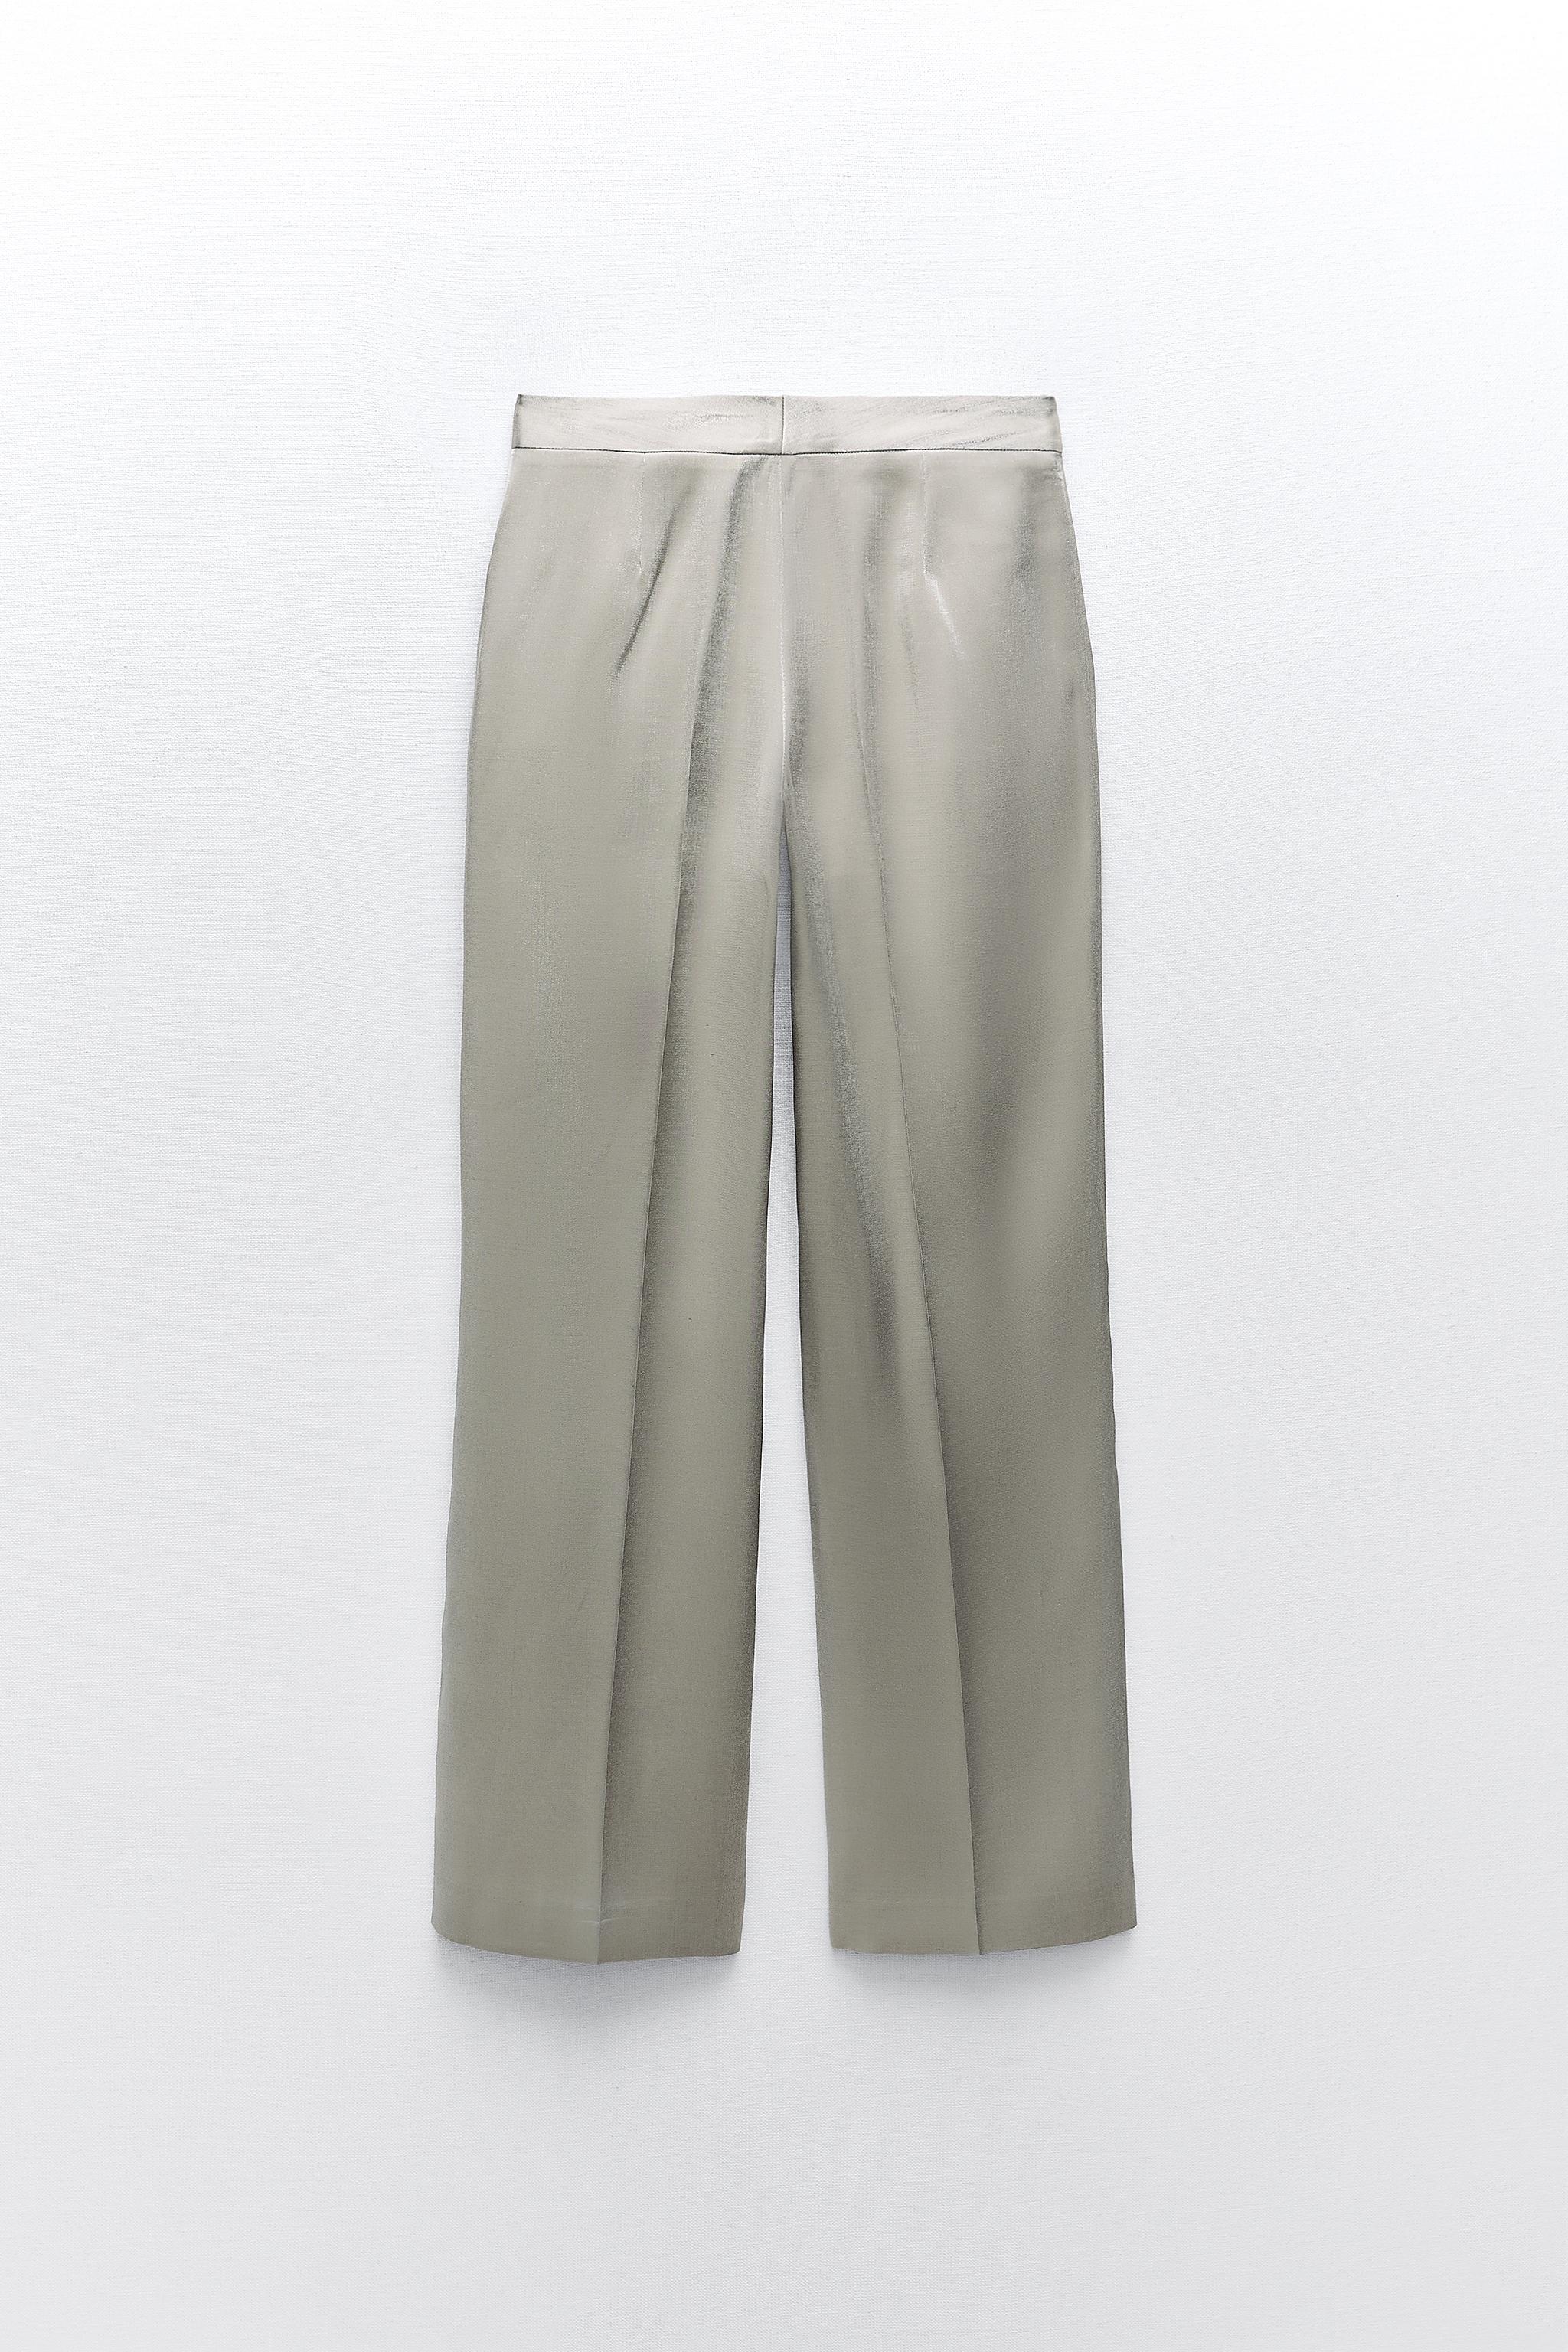 Miayilima Plus Size Pants Silver Metallic Straight Leg Pants for